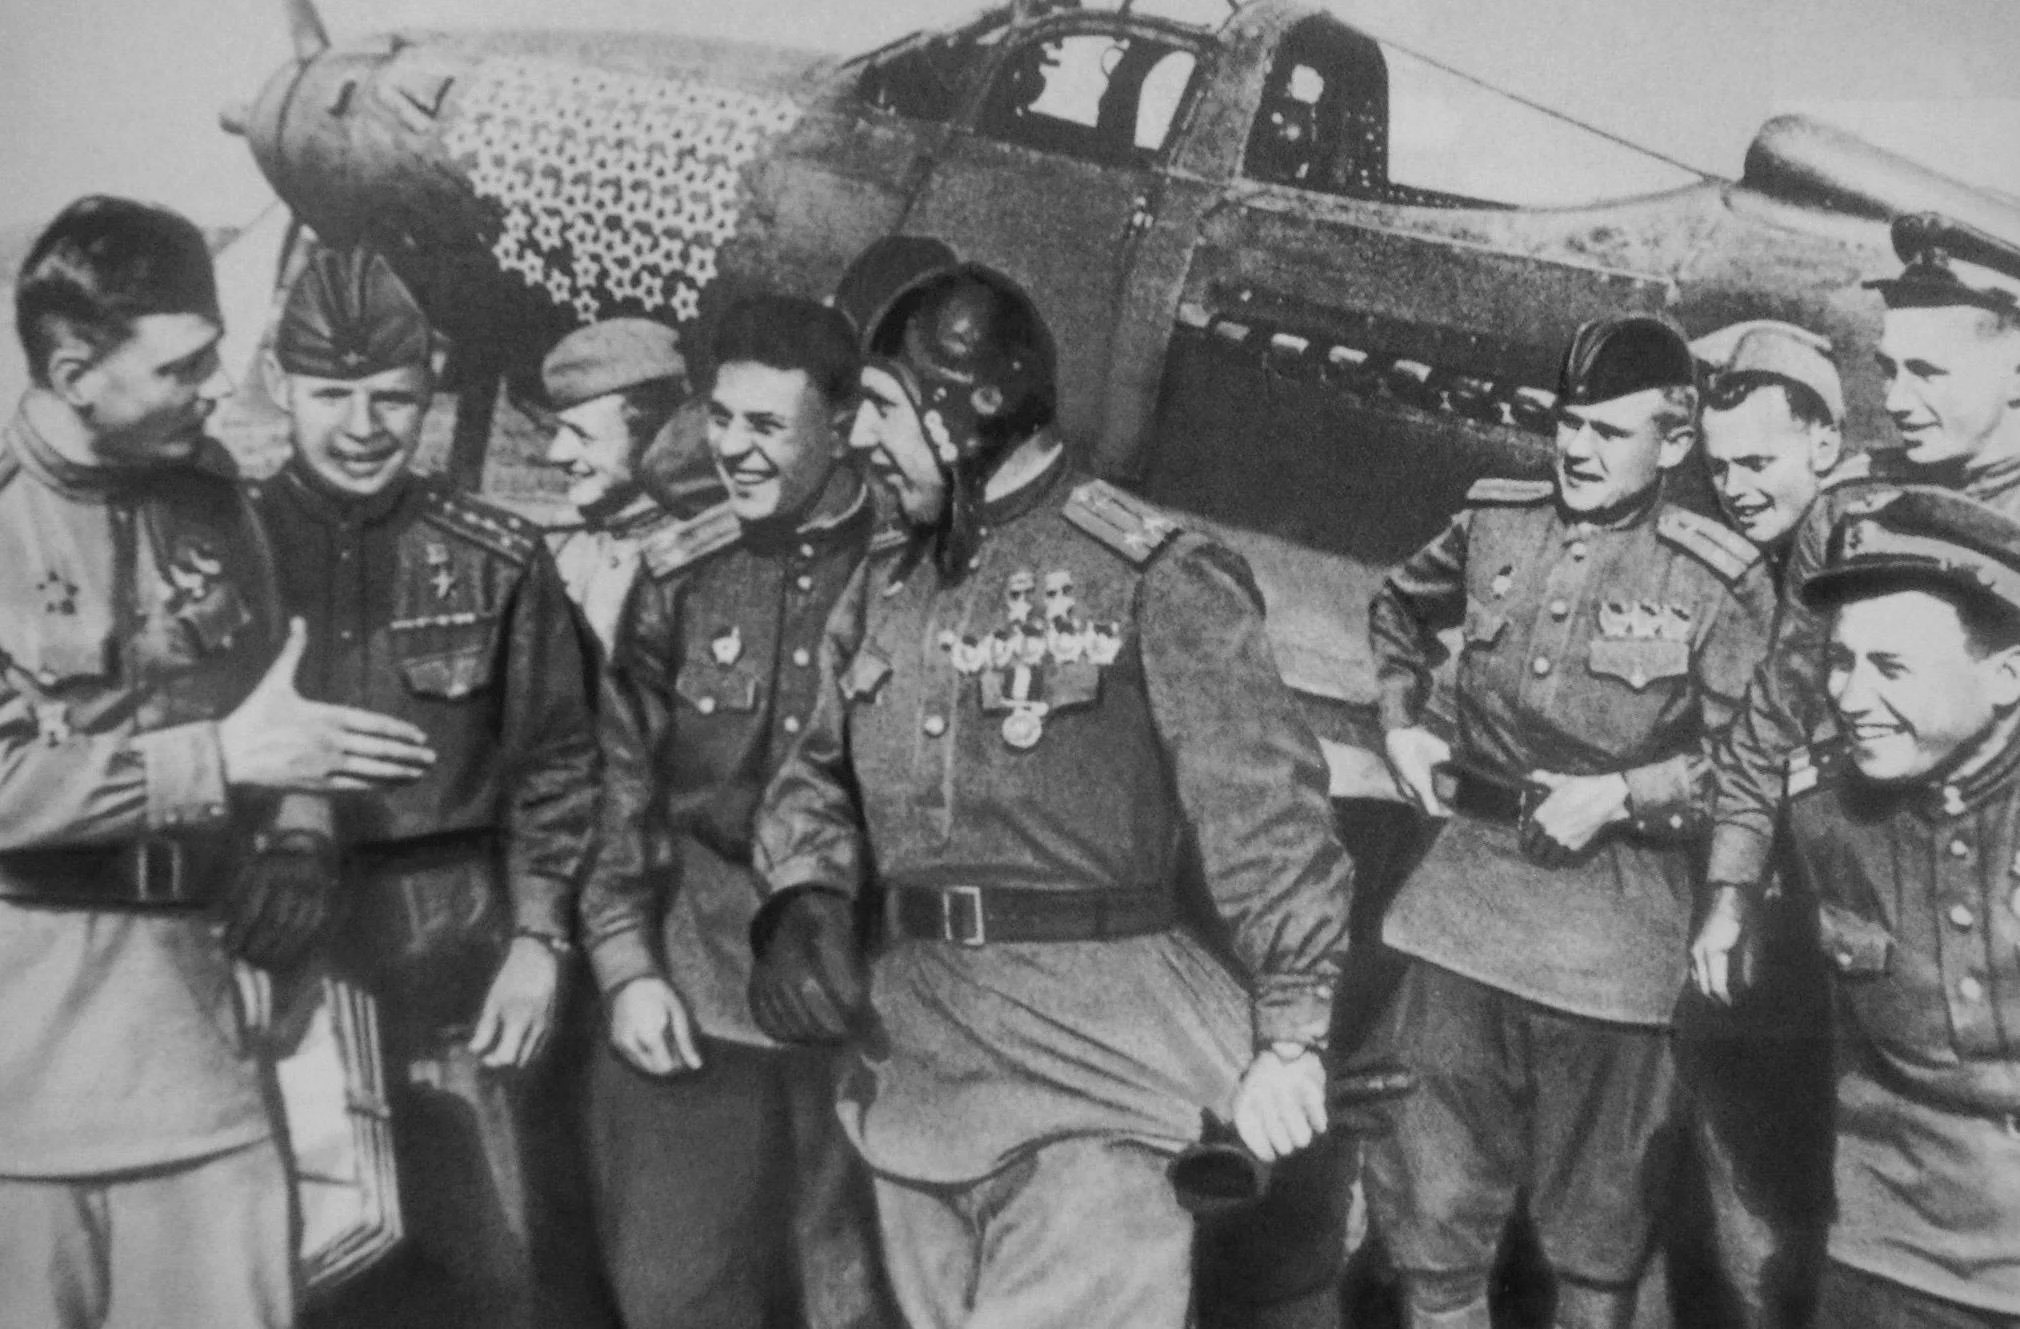 Покрышкин с товарищами на фоне его P-39 Airacobra